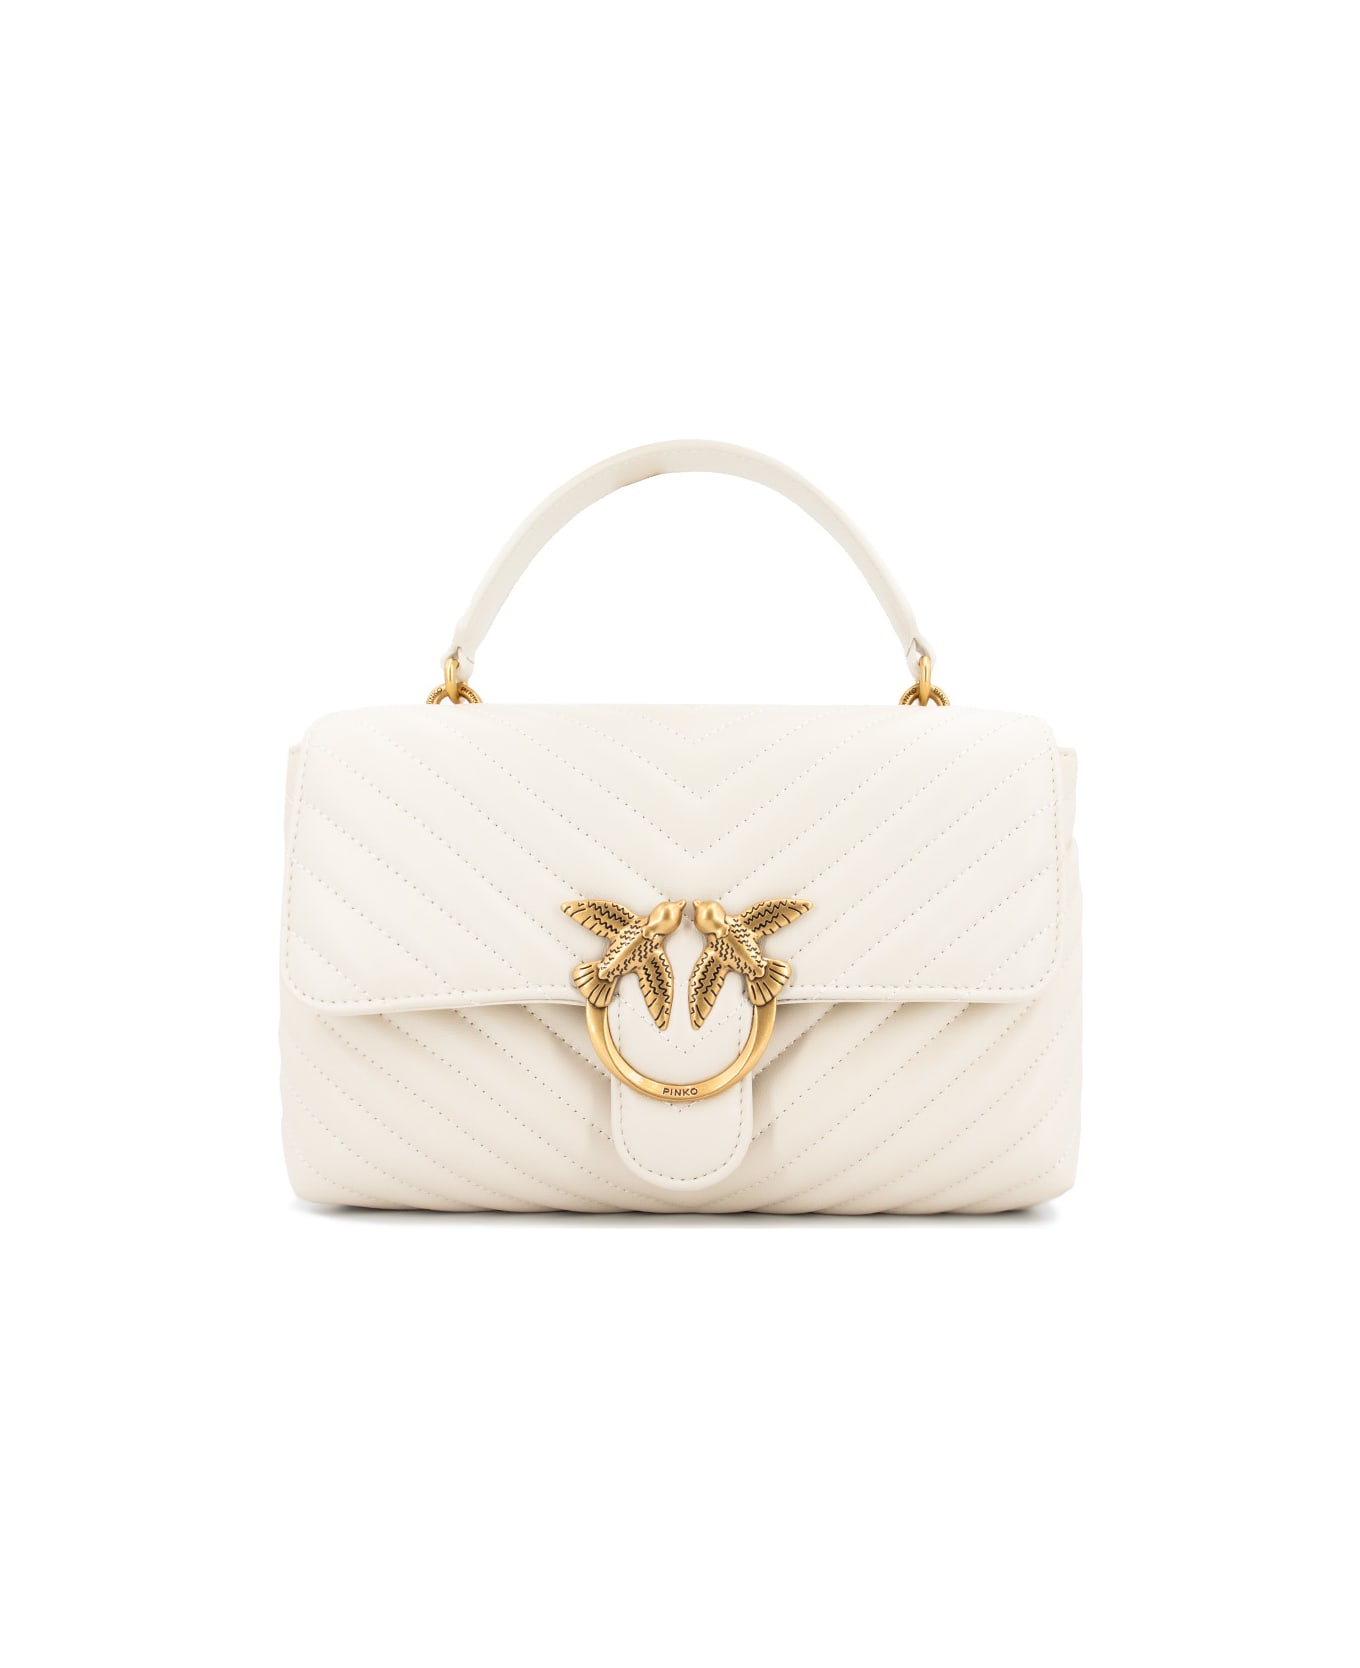 Pinko Handbag - Q Bianco Seta Antique Gold トートバッグ